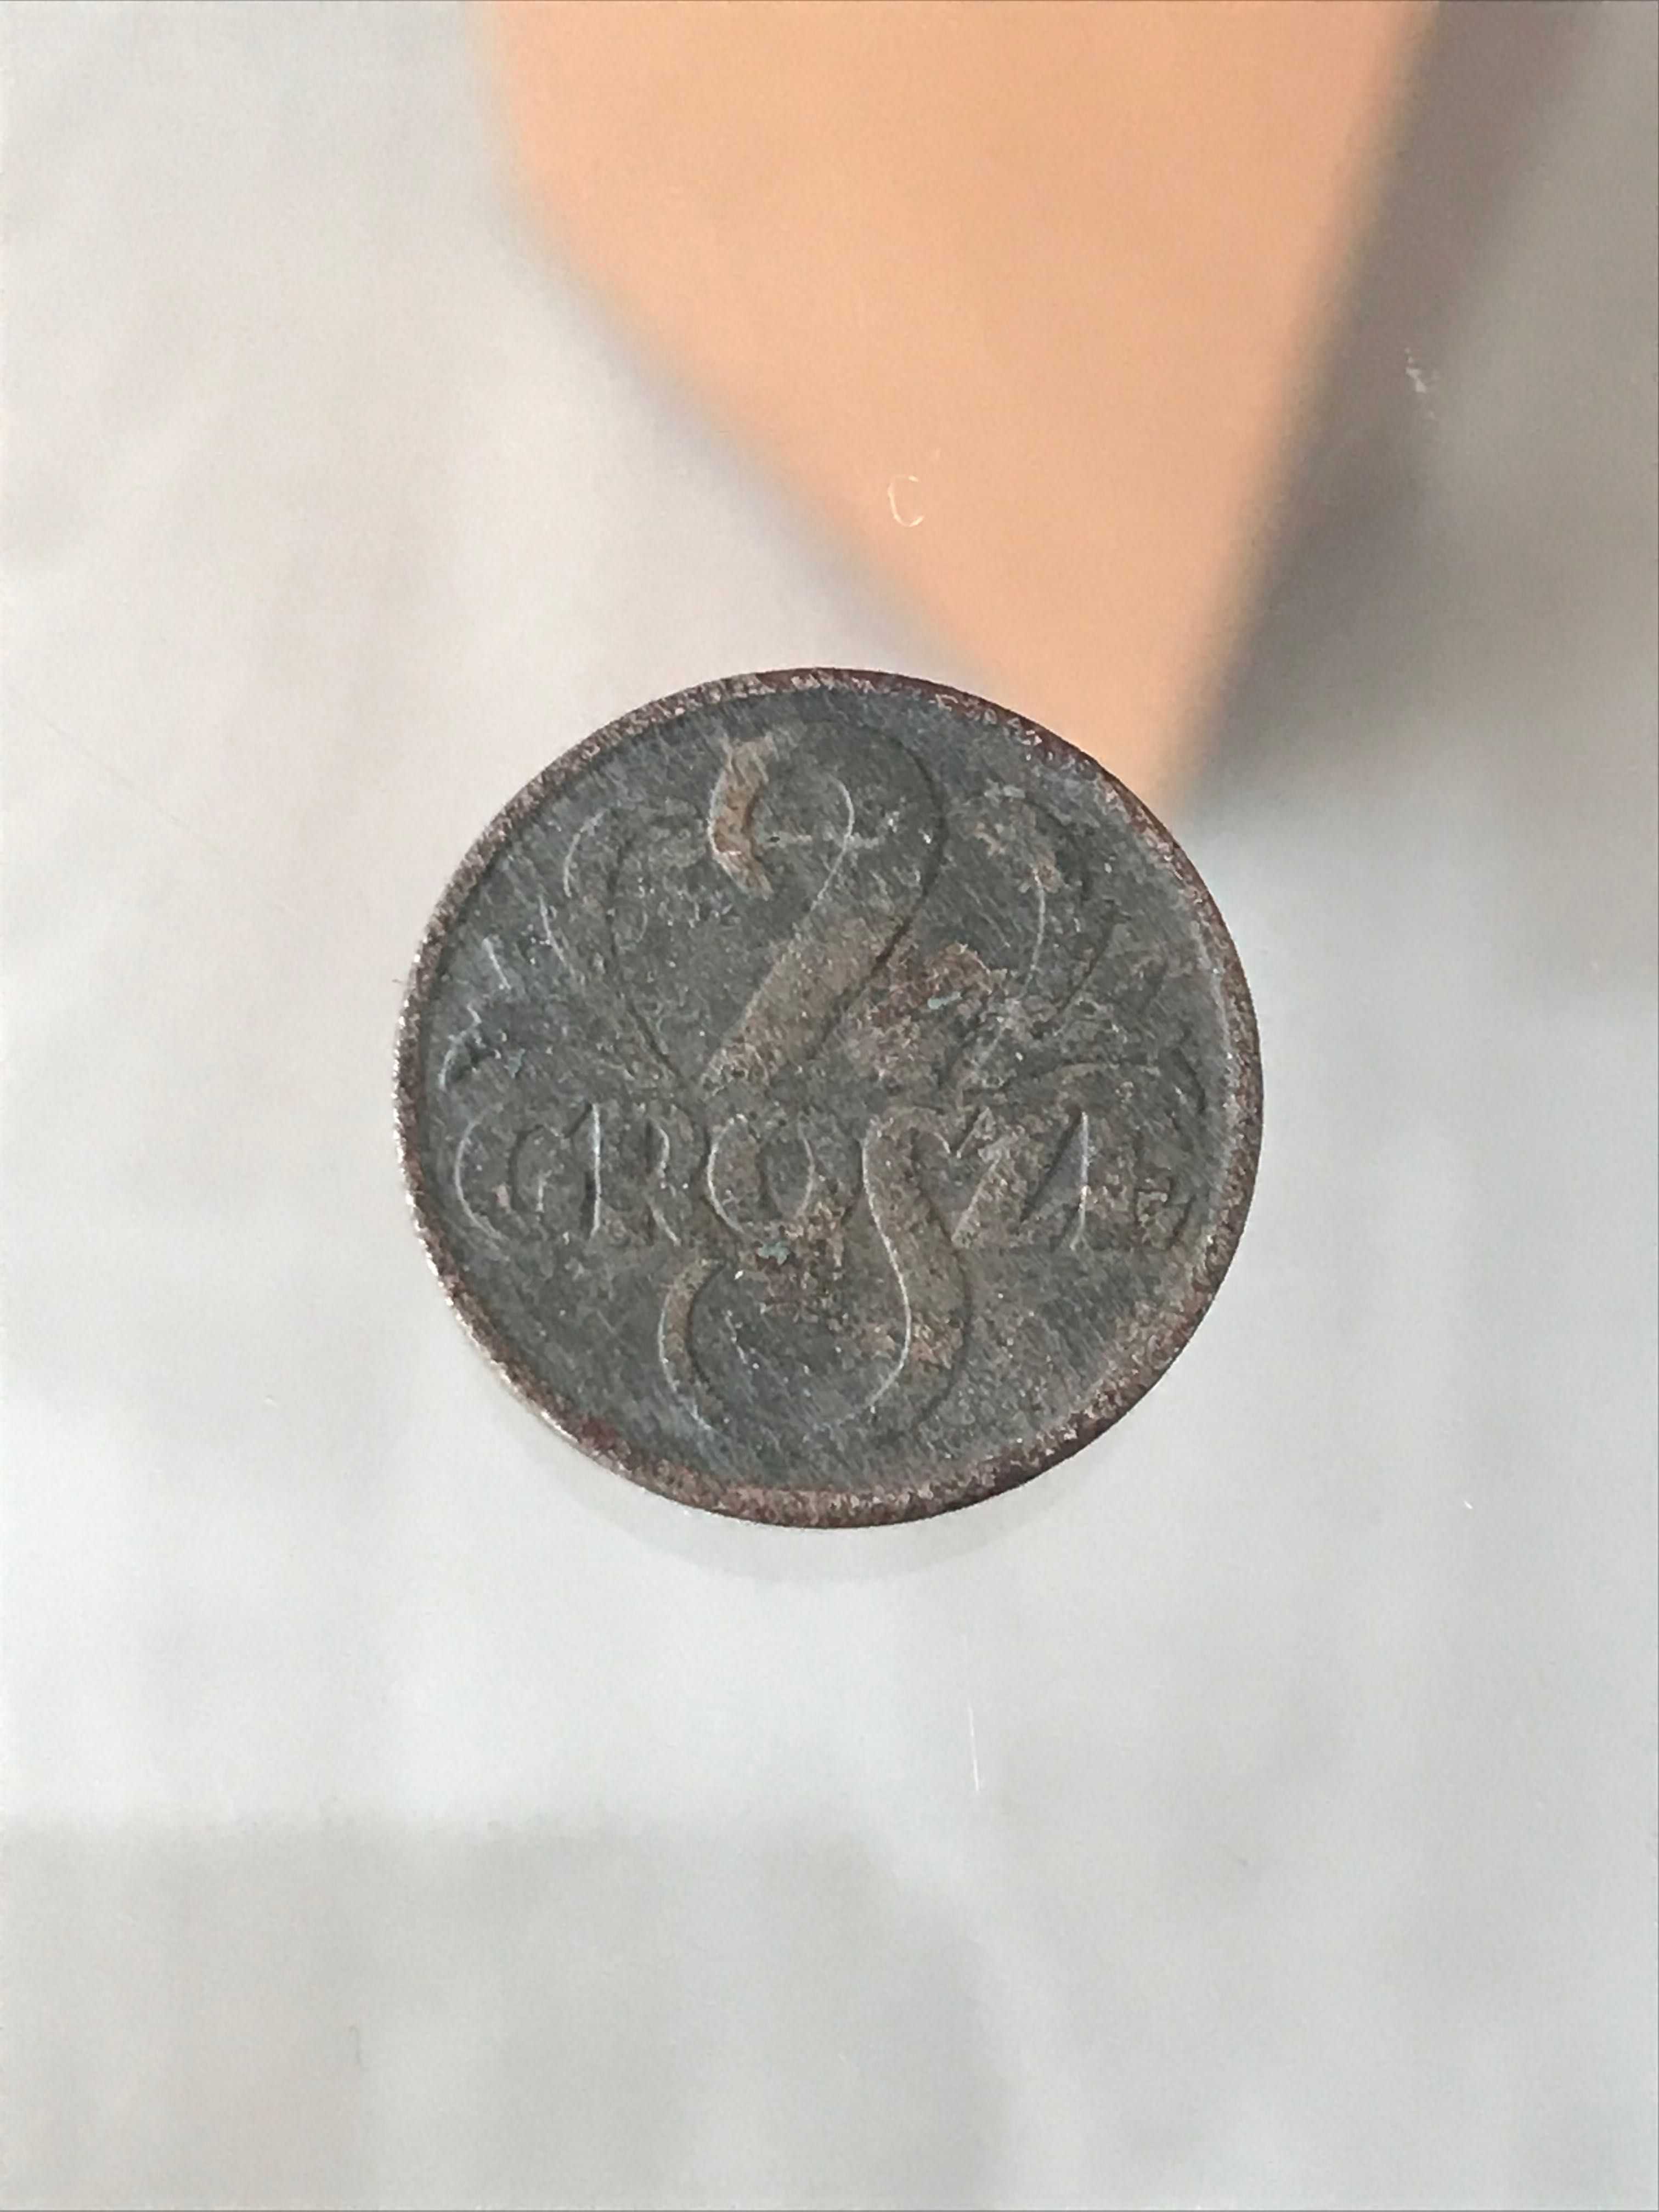 Moneta prl 2 grosze 1928r.